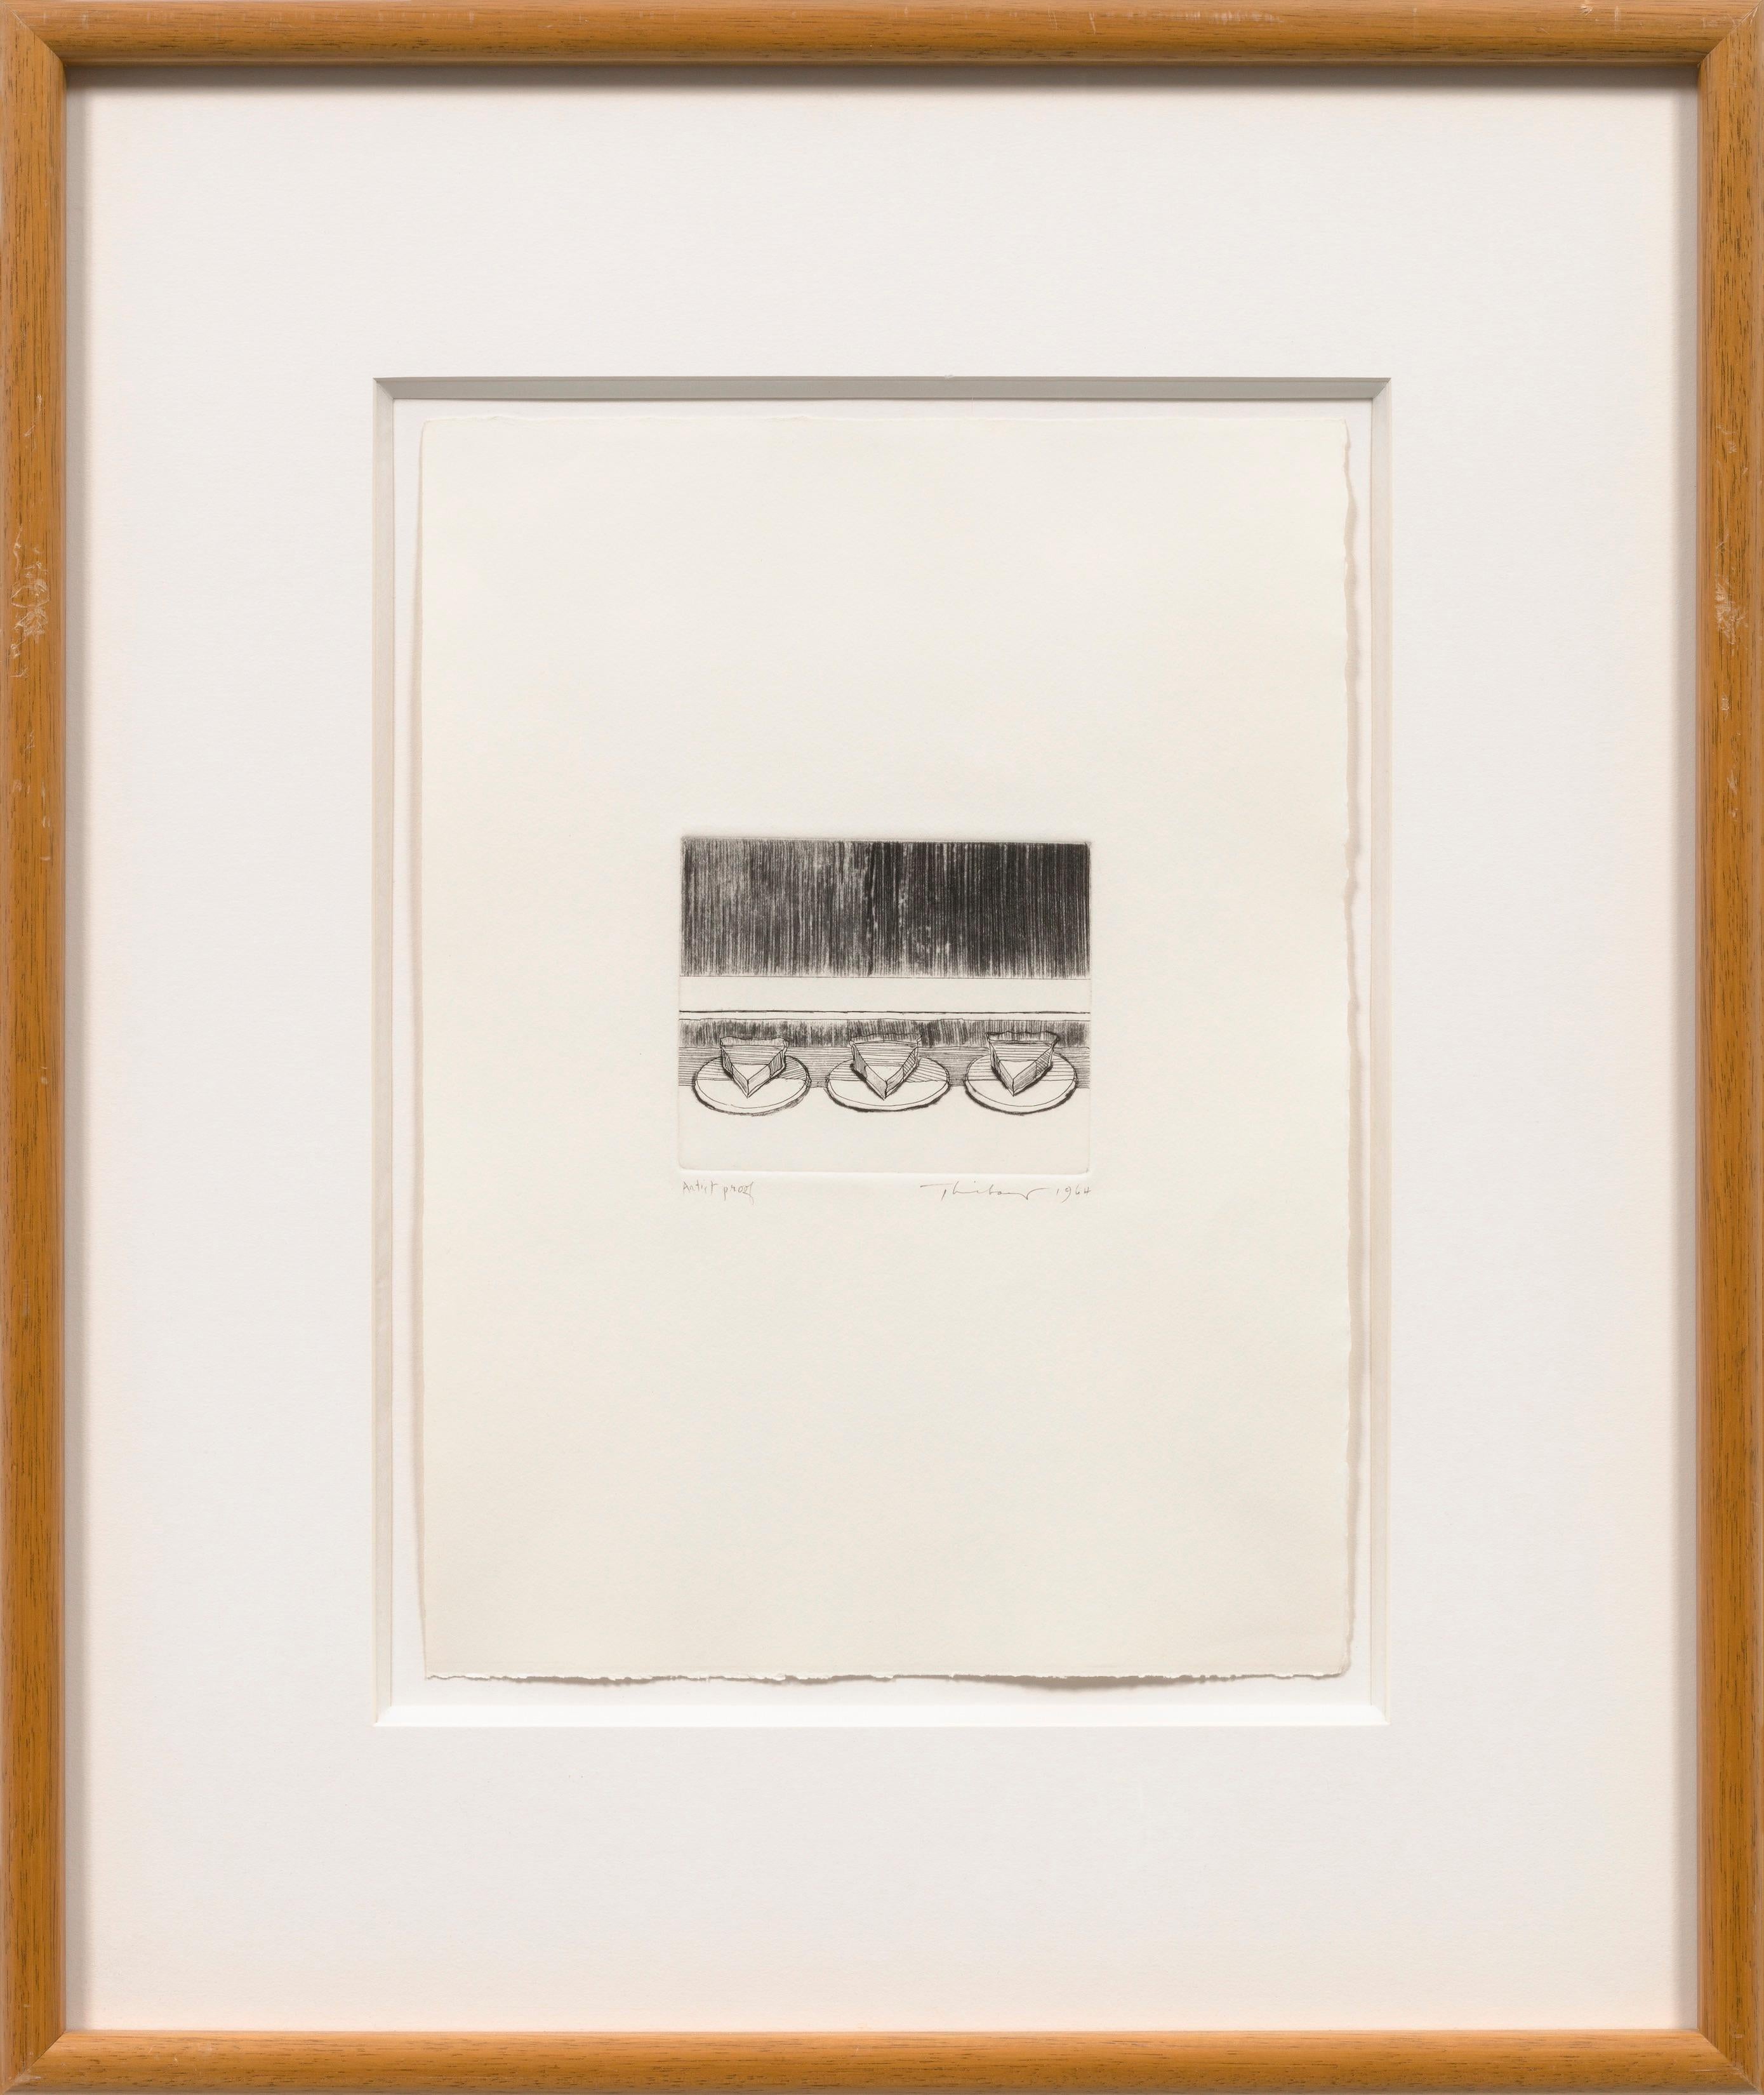 What started Wayne Thiebaud's interest in art?